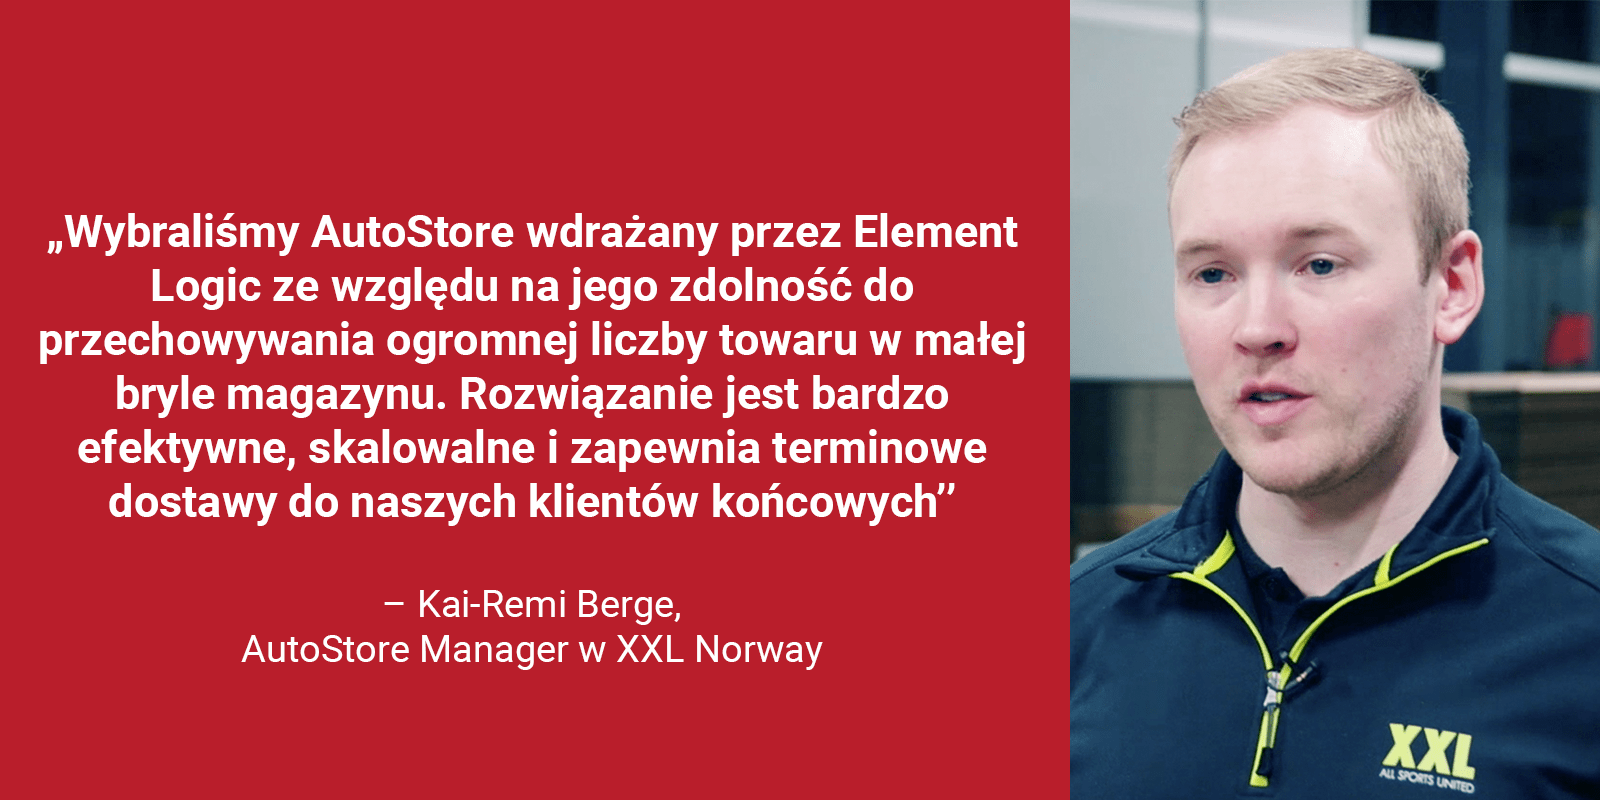 Kai-Remi Berge, AutoStore Manager w XXL Norway